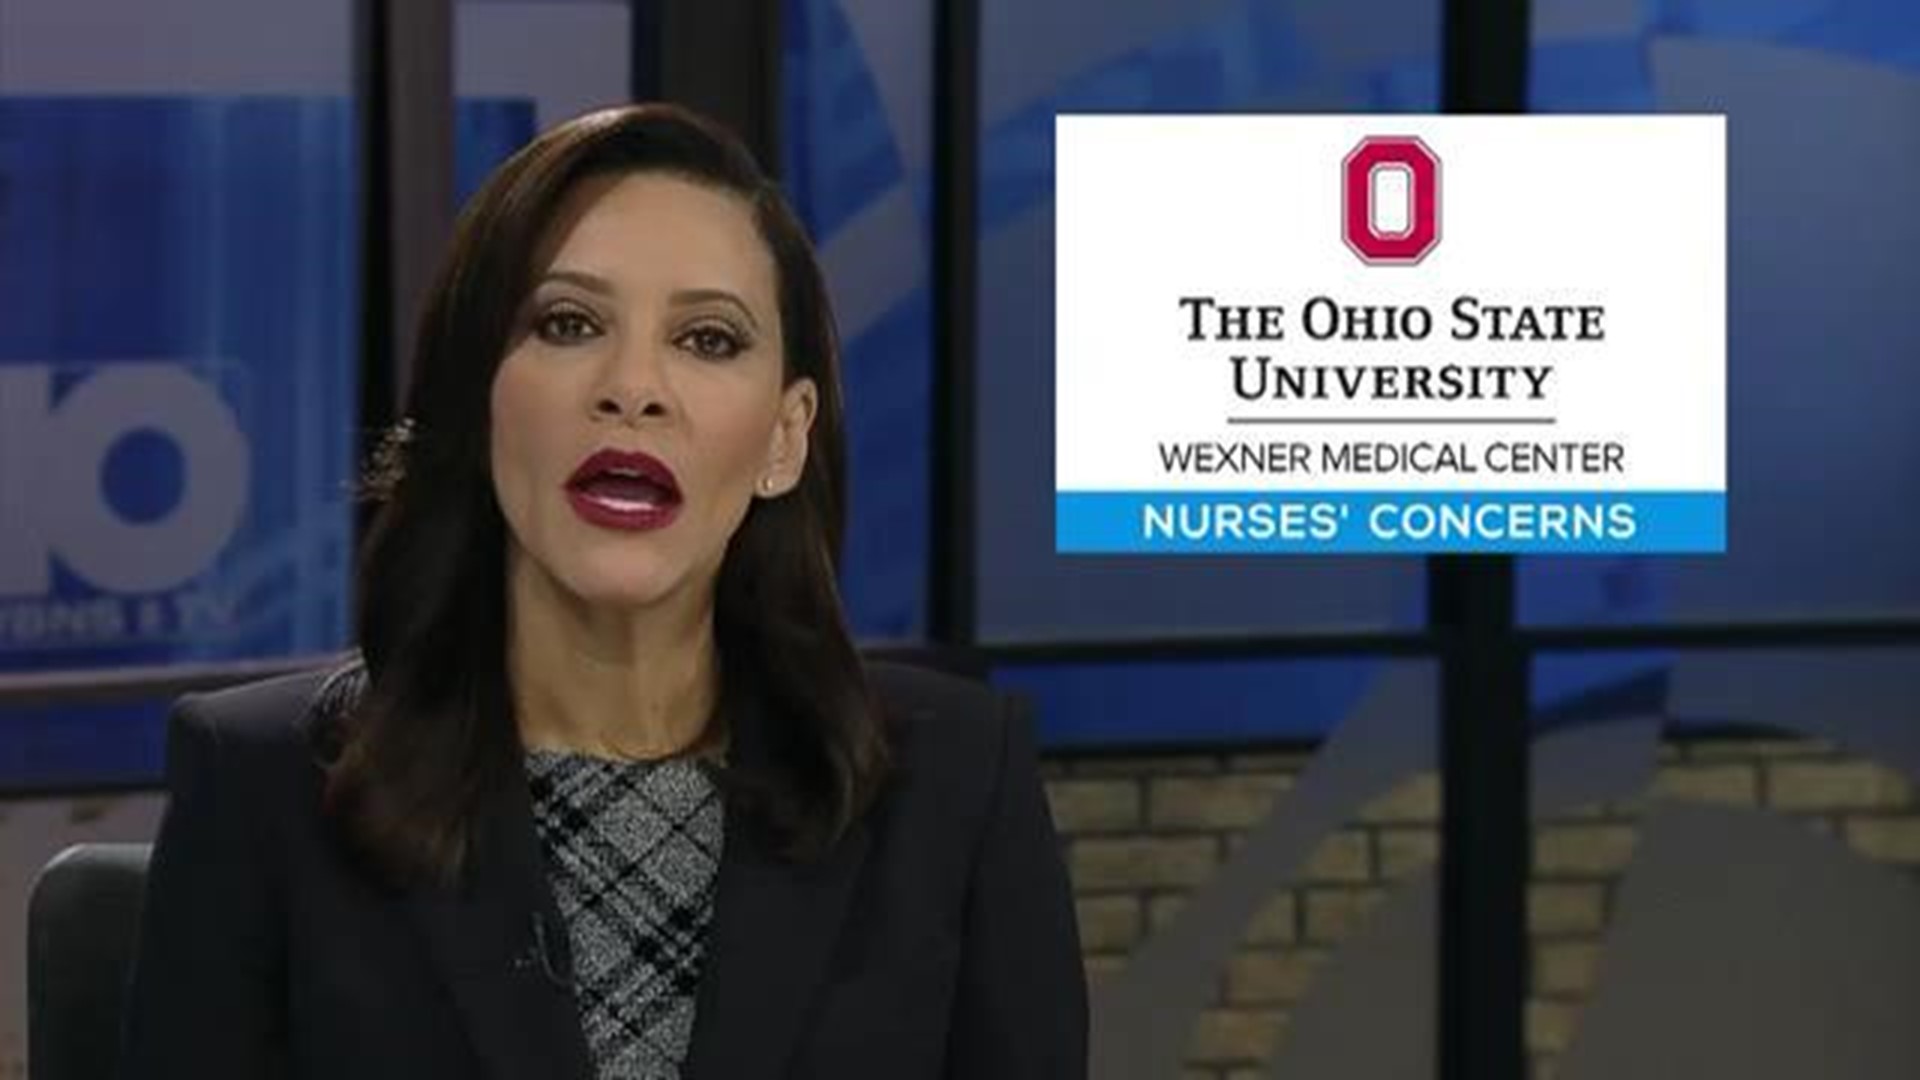 OSU Nurses: Mandatory overtime causing fatigue, jeopardizing patient safety